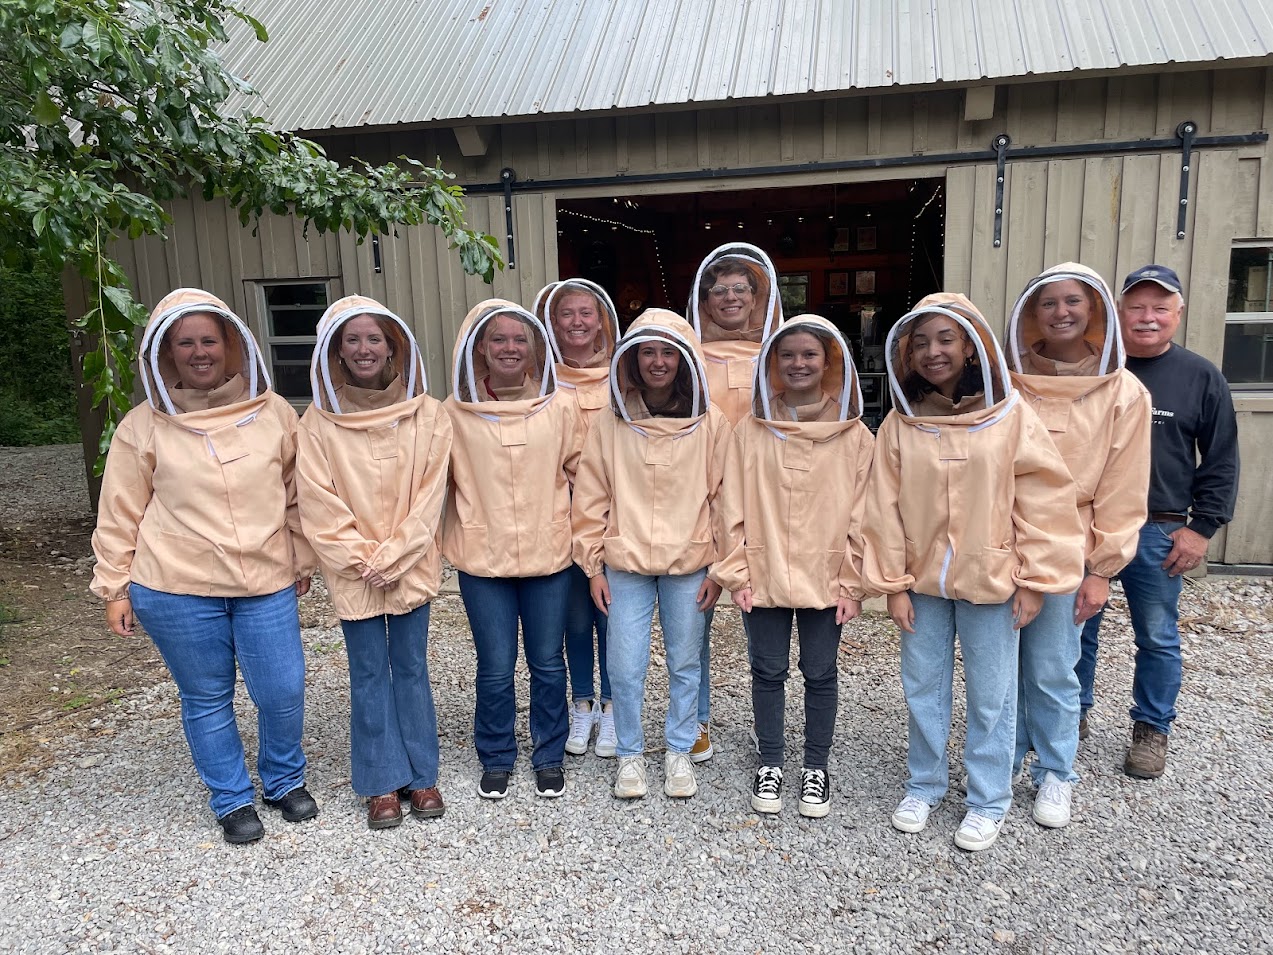 Interns in beekeeping suits.